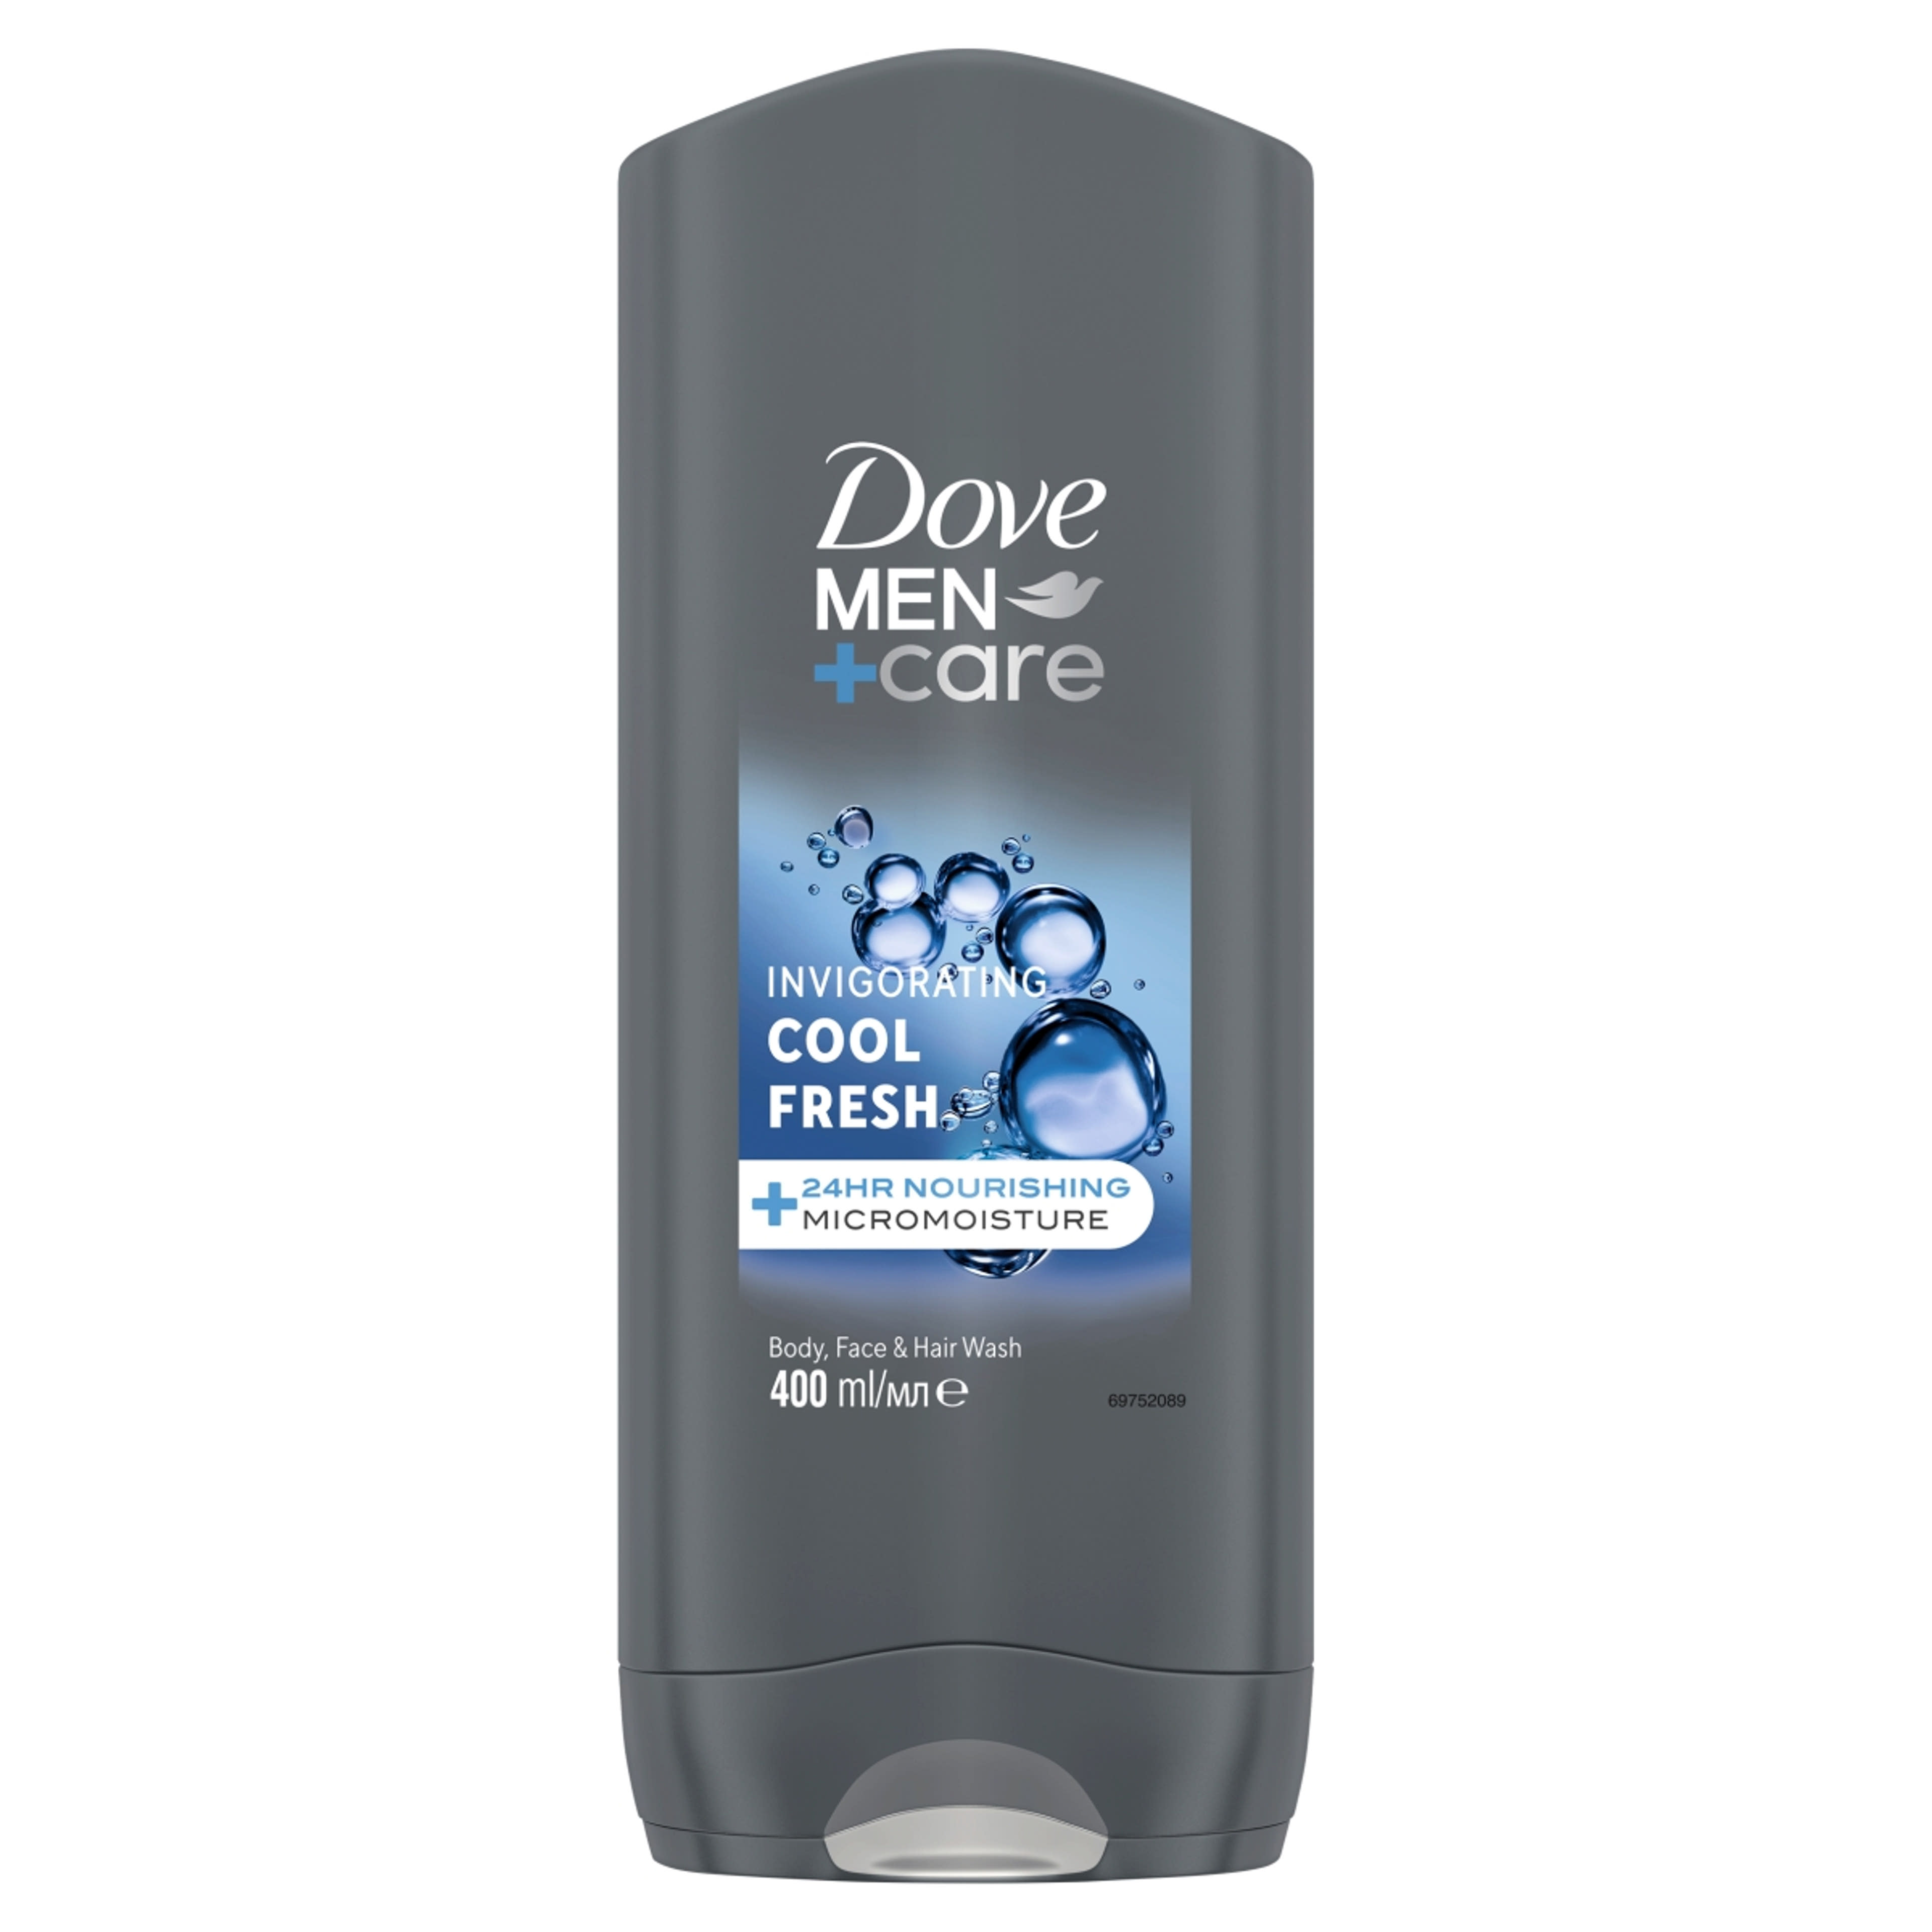 Dove Men+Care Invigorating Cool Fresh tusfürdő testre, arcra, hajra - 400 ml